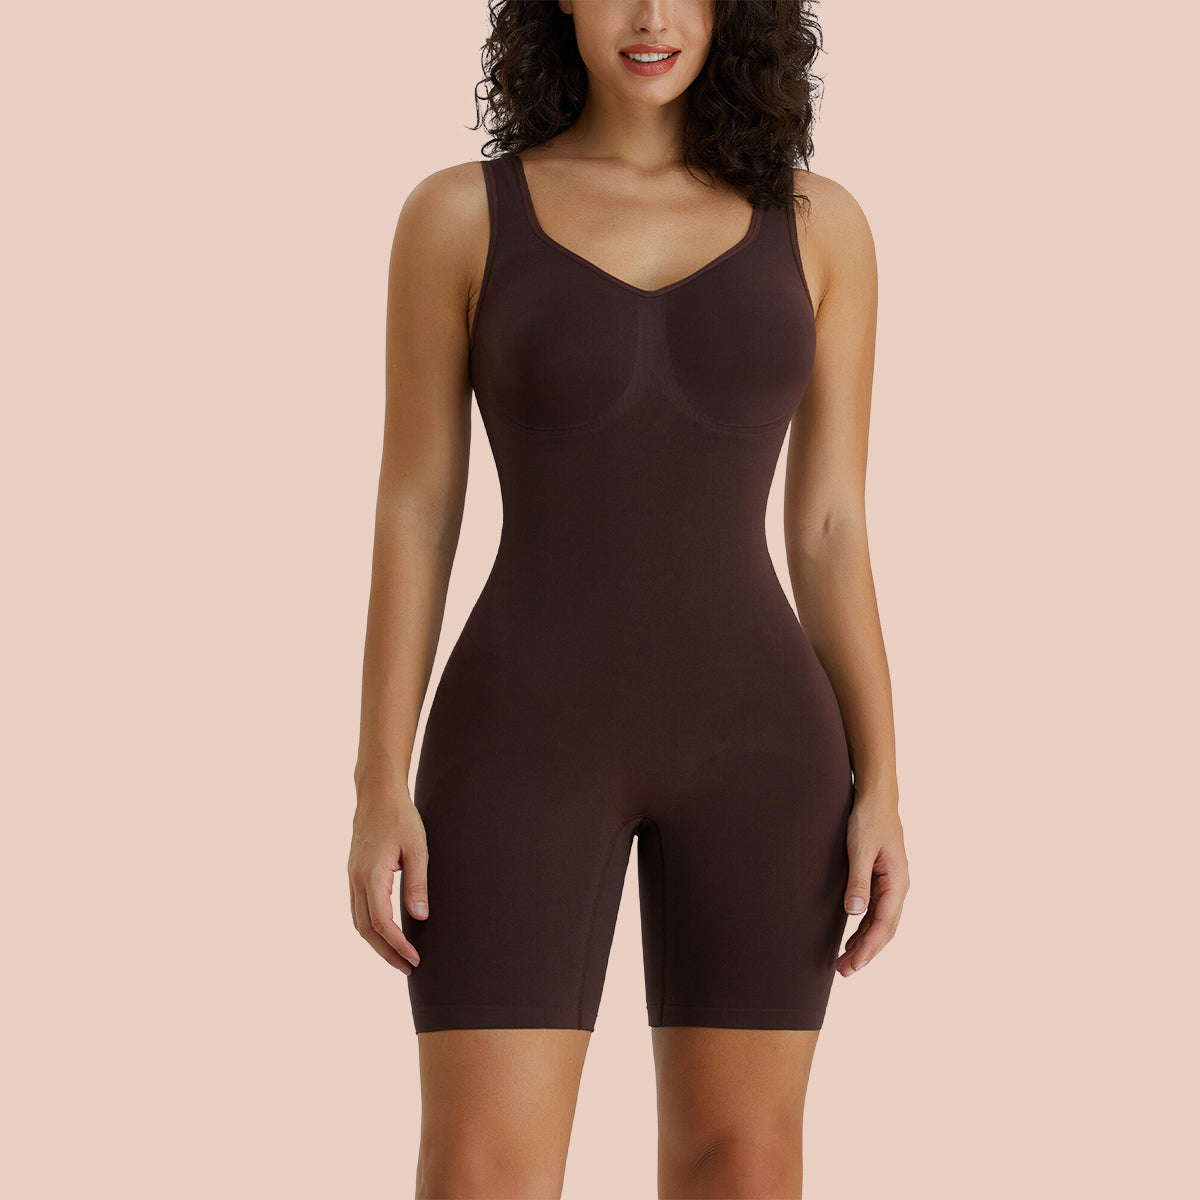 Buy ARANZA Women Bodysuit Jumpsuit Body Shaper Blouse Off Shoulder